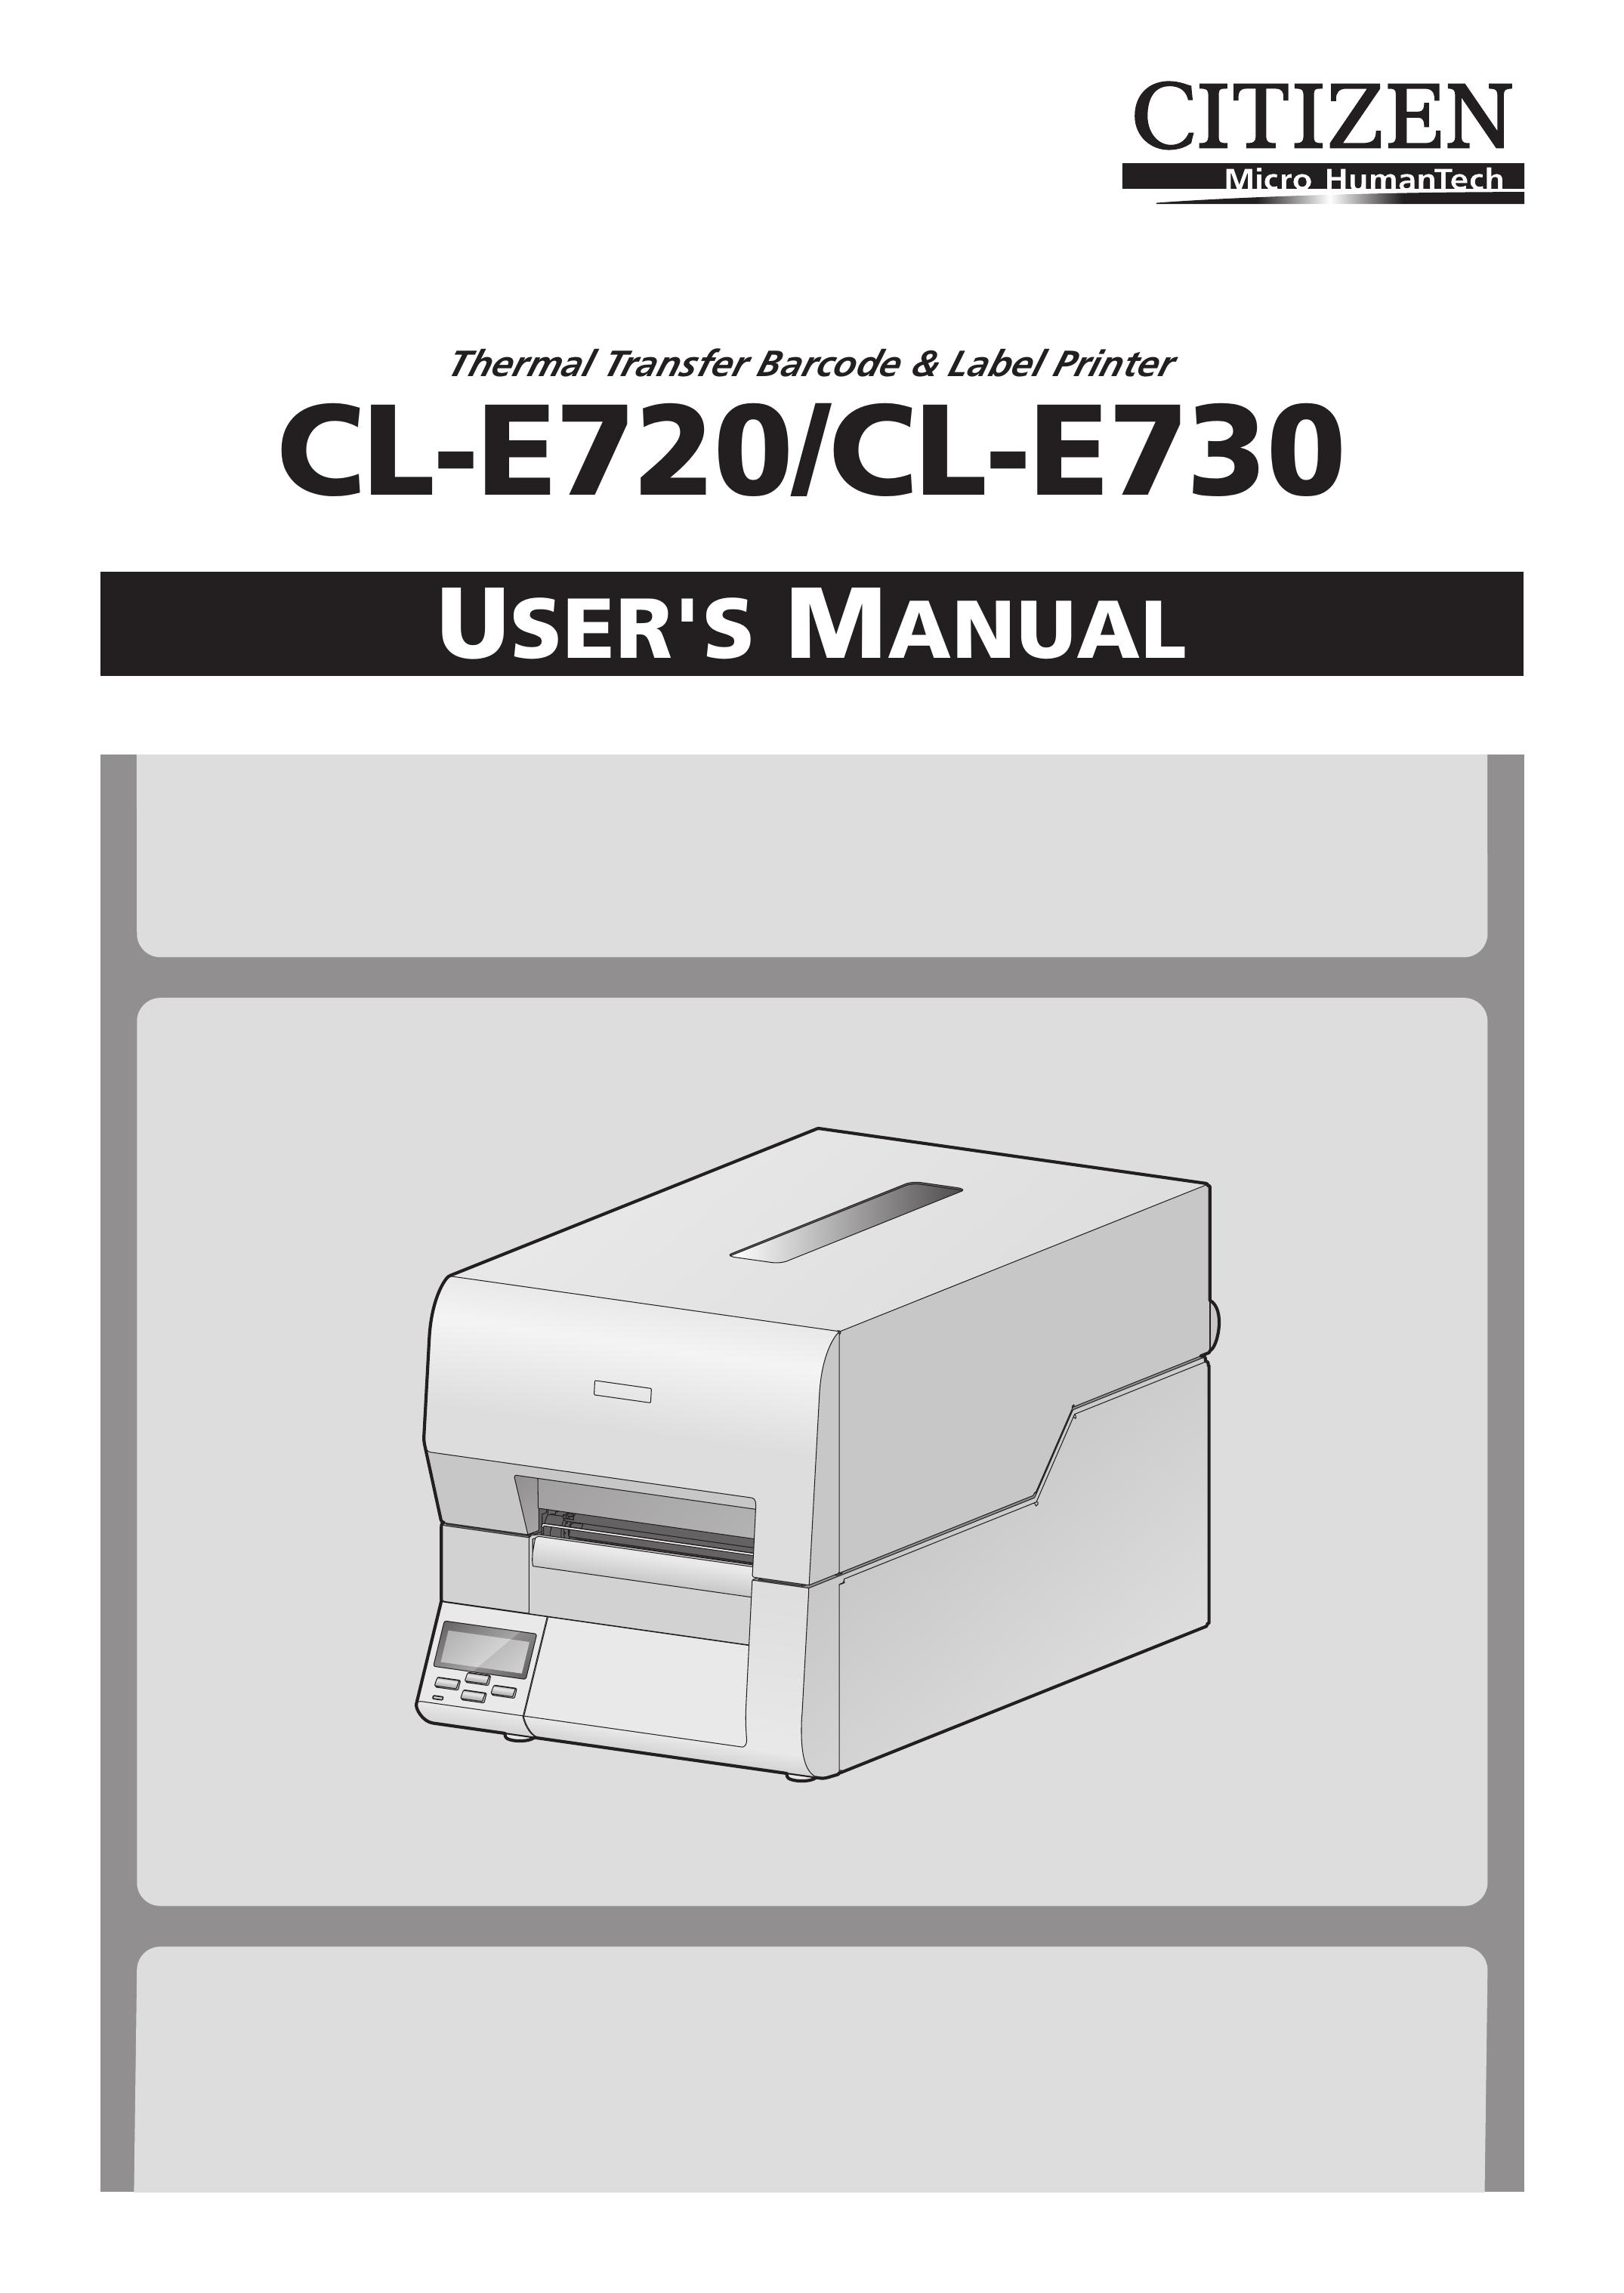 Citizen CL-E730 Slow Cooker User Manual